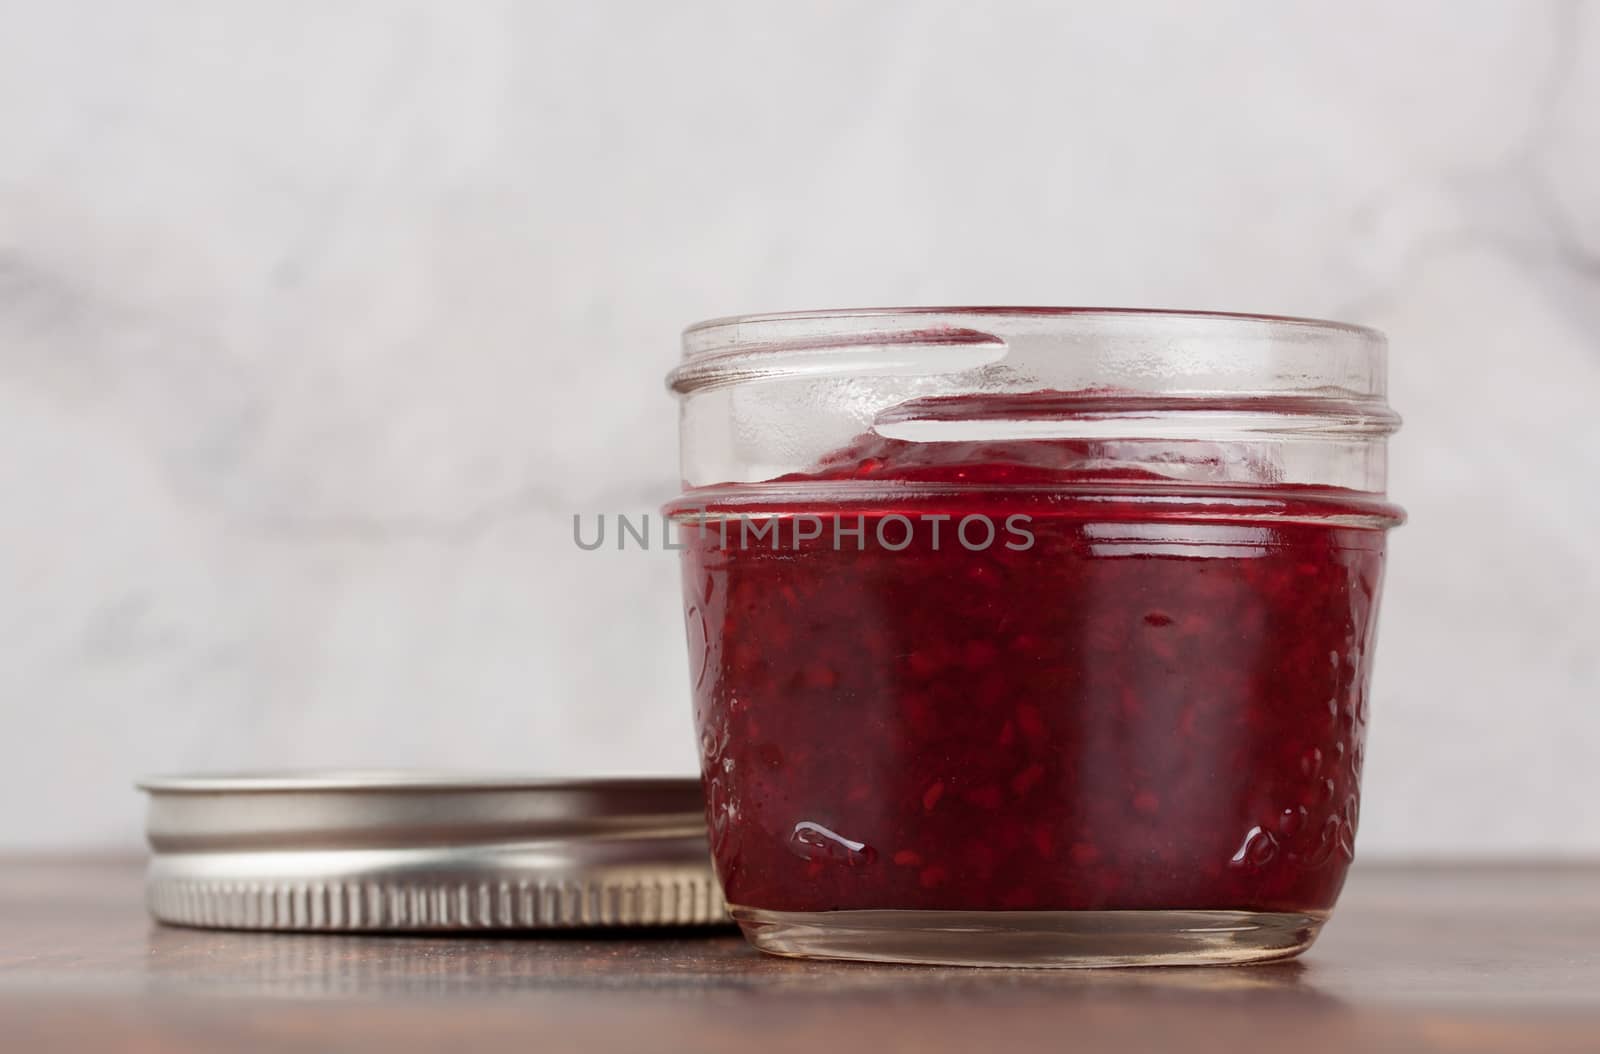 Delicious homemade raspberry jam in a reusable glass jar